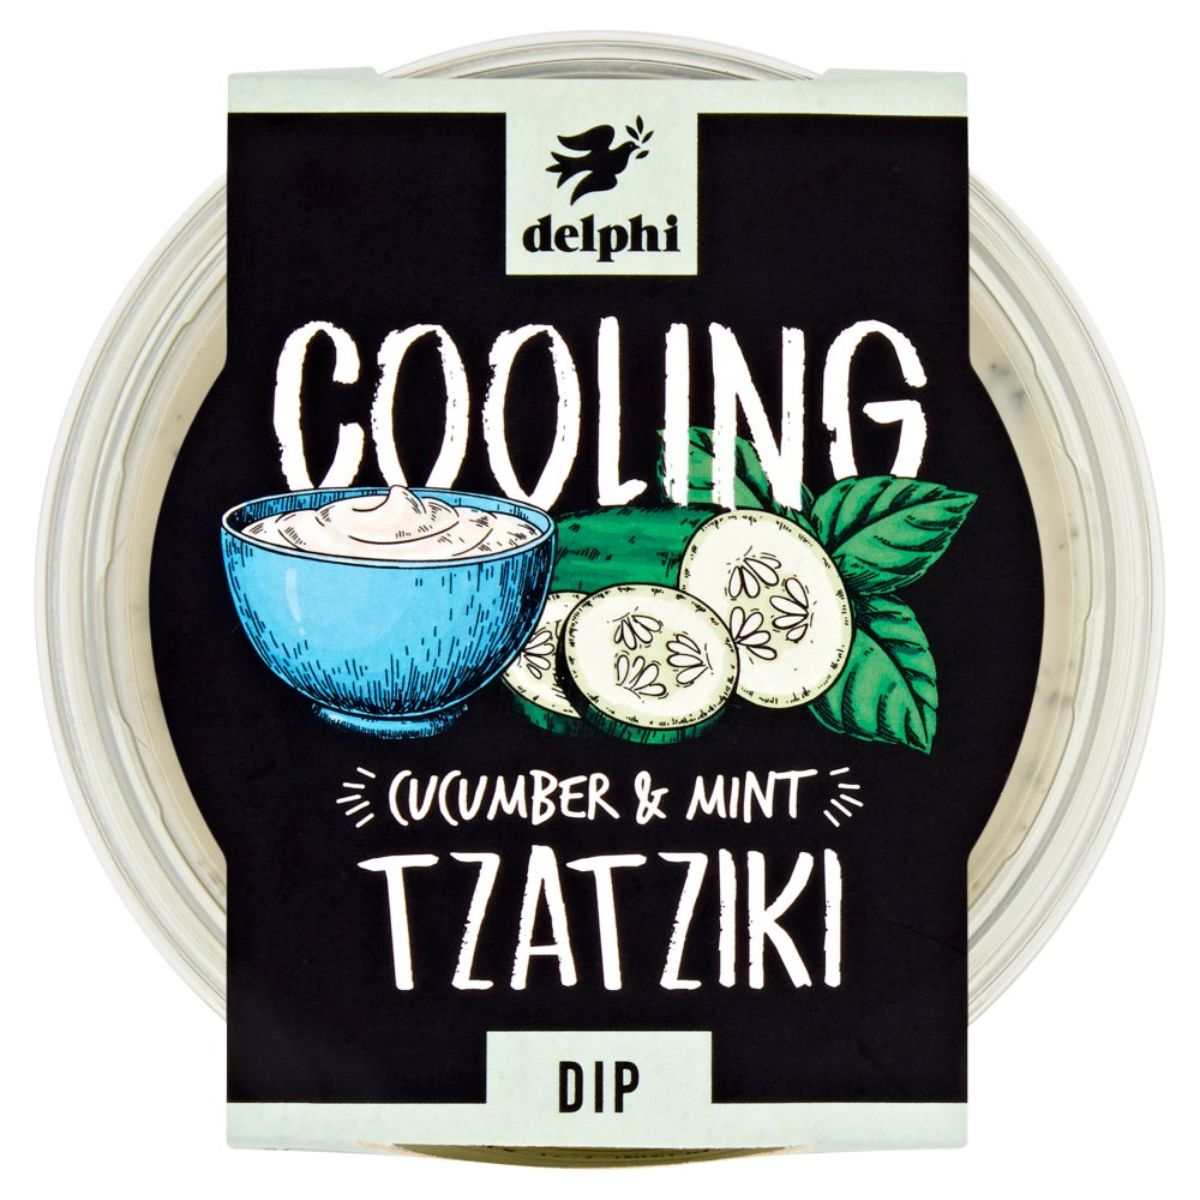 Delphi - Cooling Cucumber & Mint Tzatziki Dip - 170g.